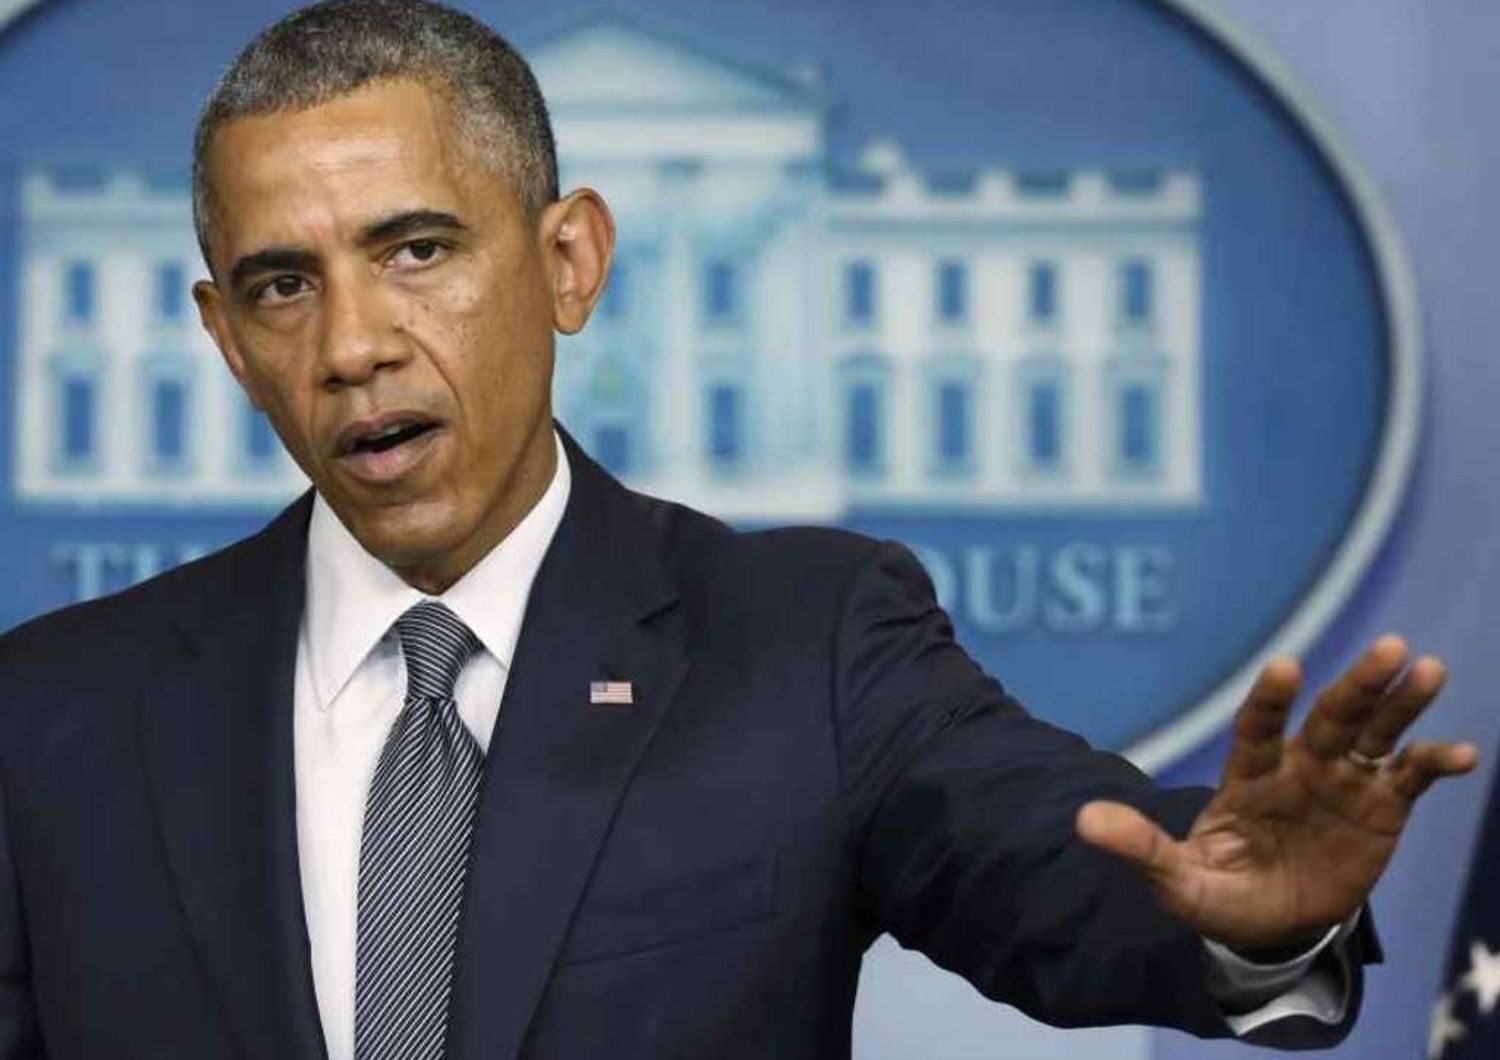 Obama suggests Ukrainian separatists caused plane crash